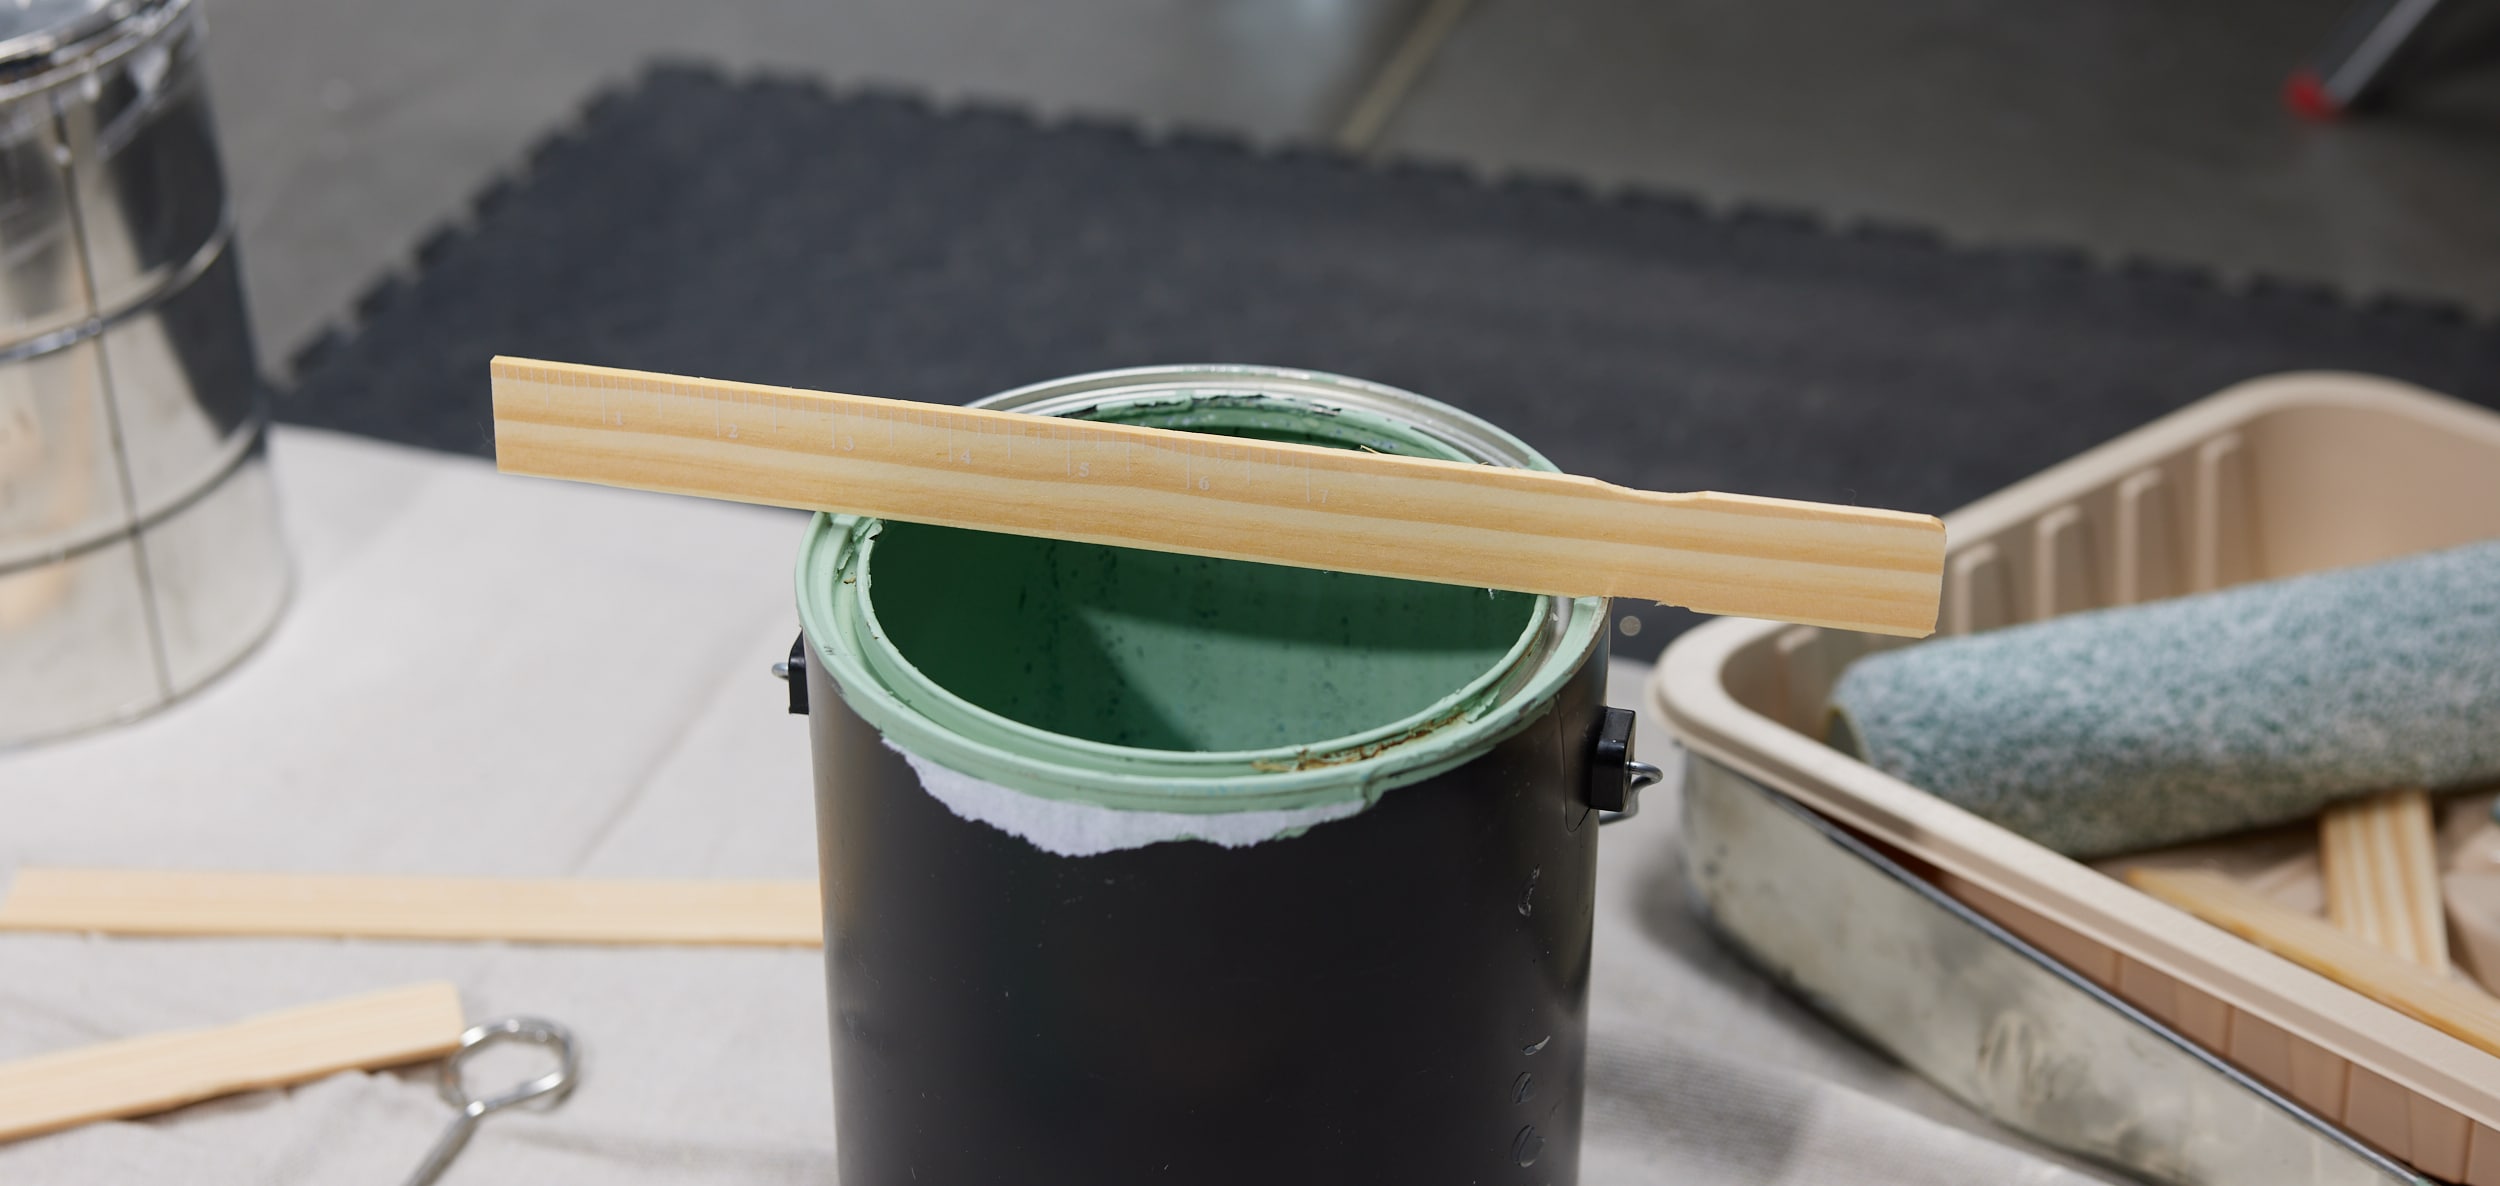 CM0133 12L Hardwood Paint Stir Stick